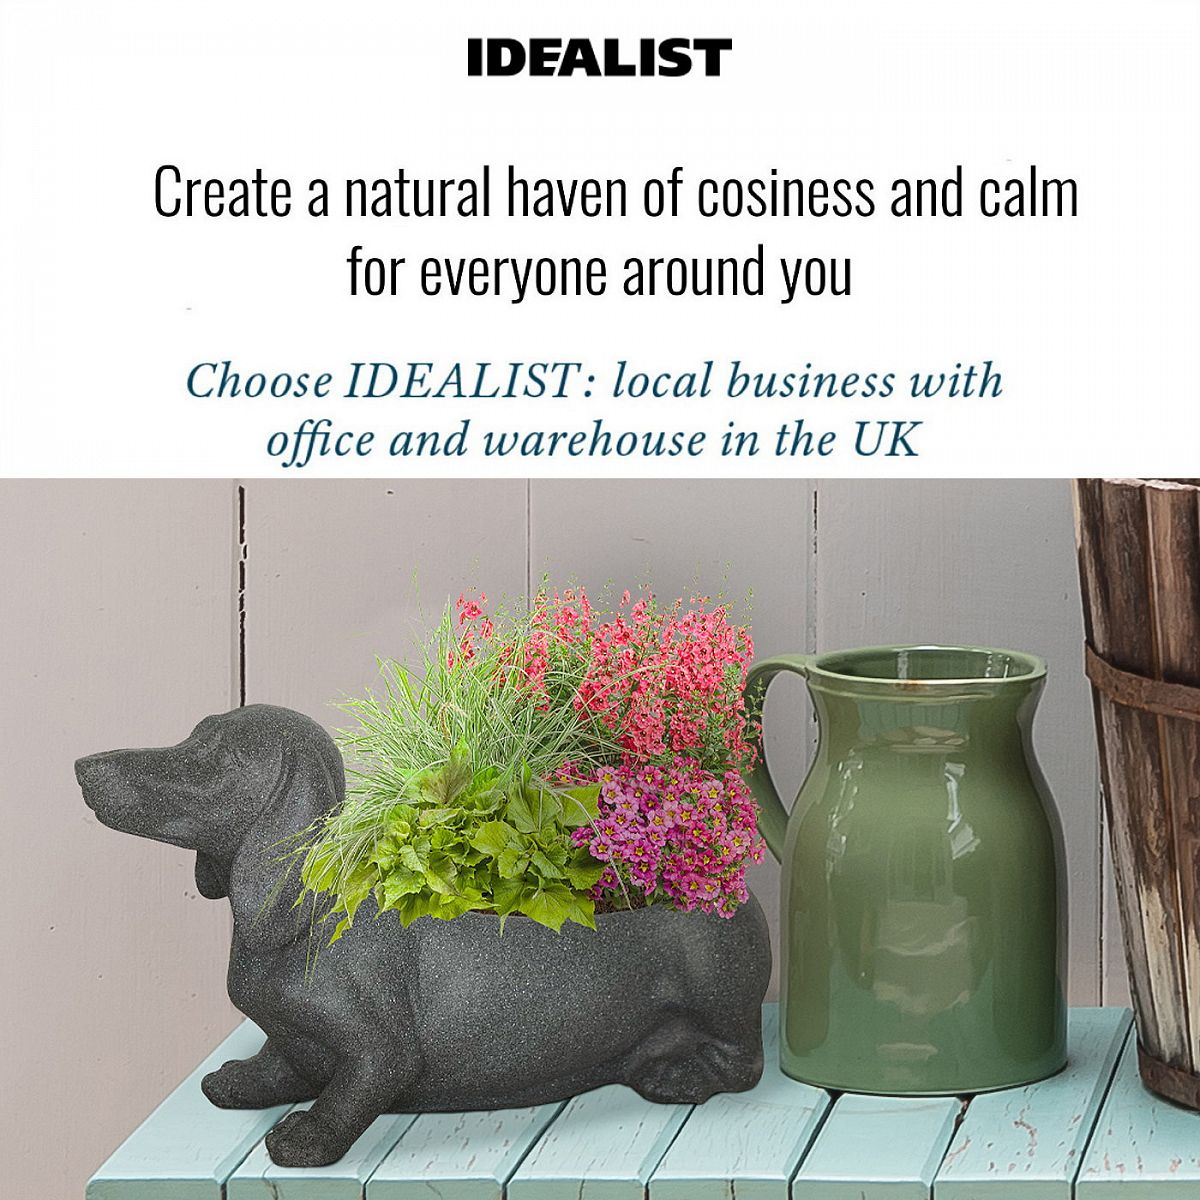 IDEALIST Lite Dog Oval Plant Pot Outdoor